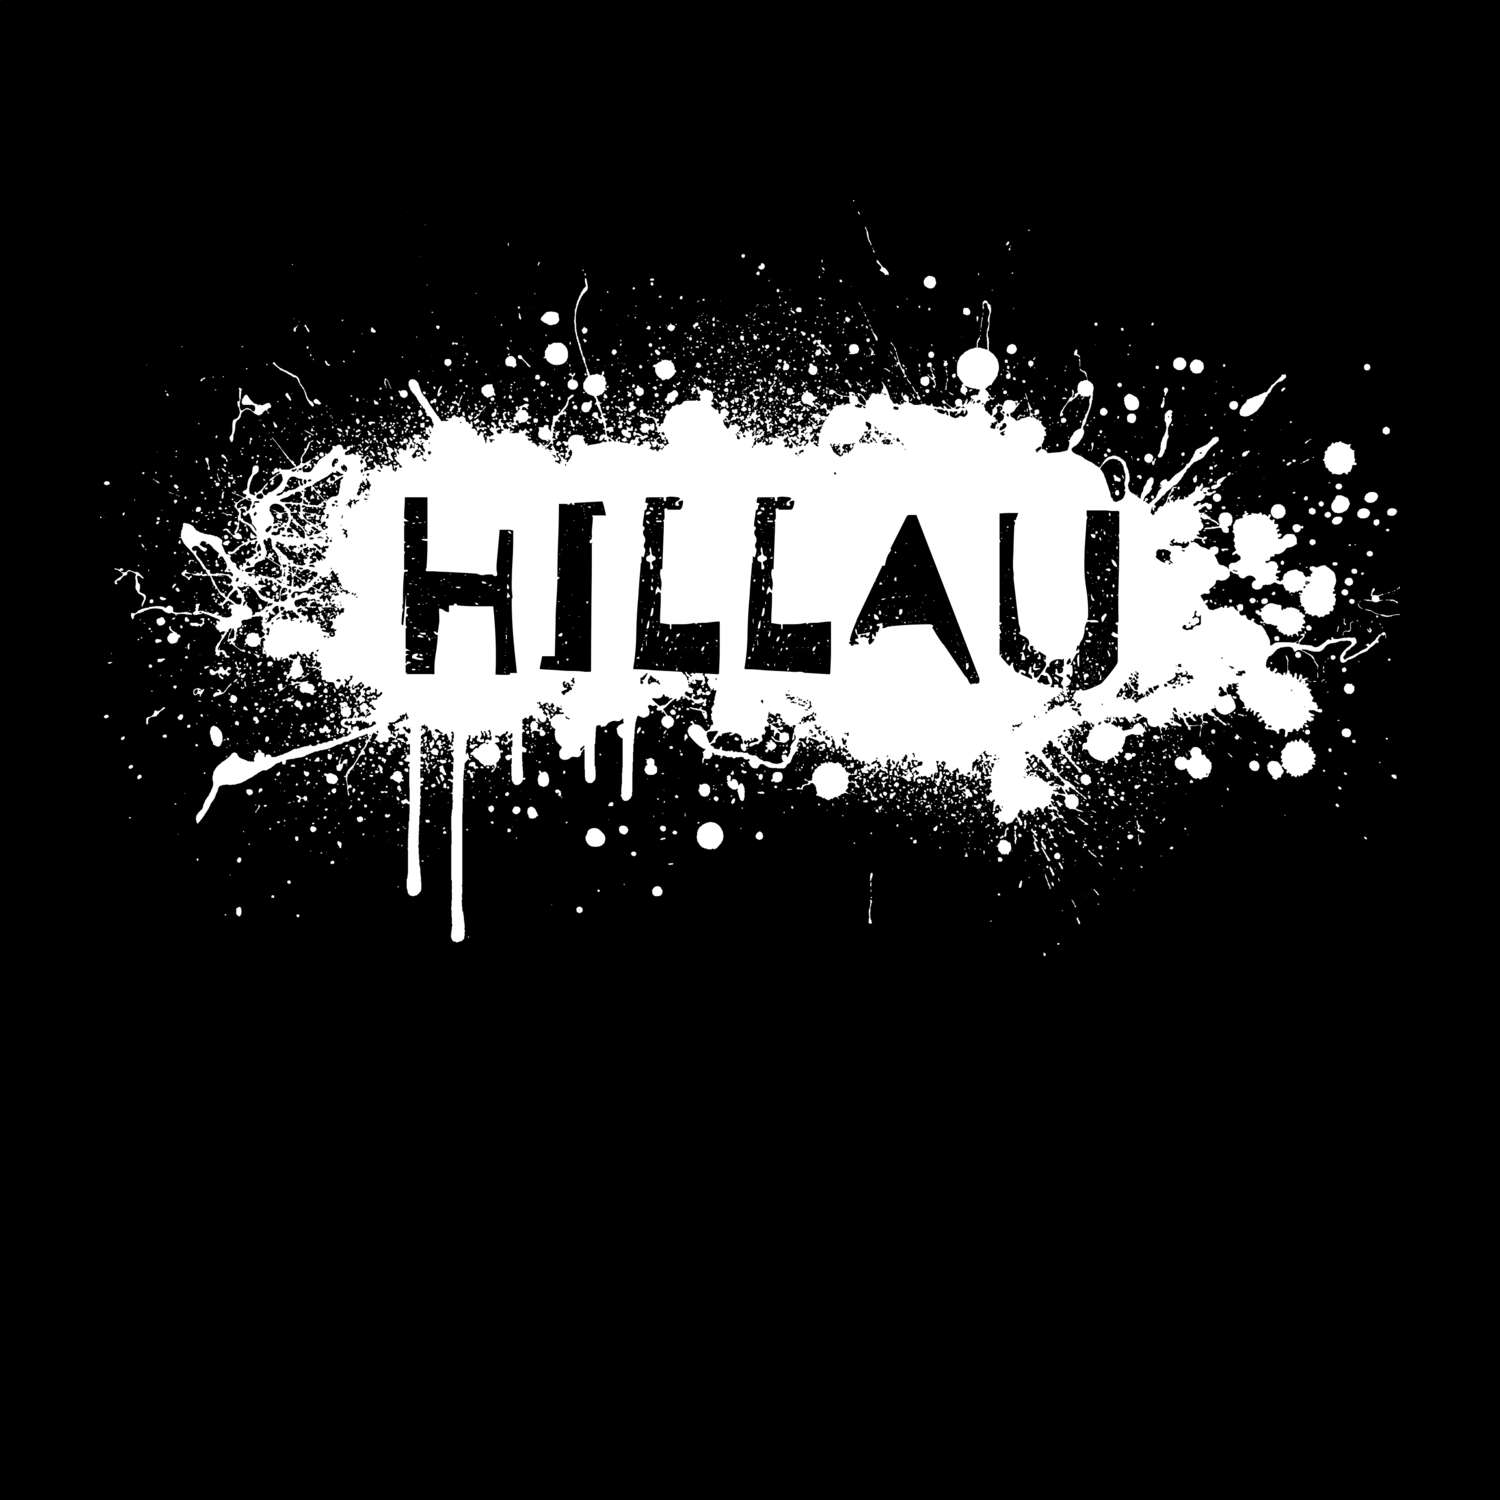 Hillau T-Shirt »Paint Splash Punk«